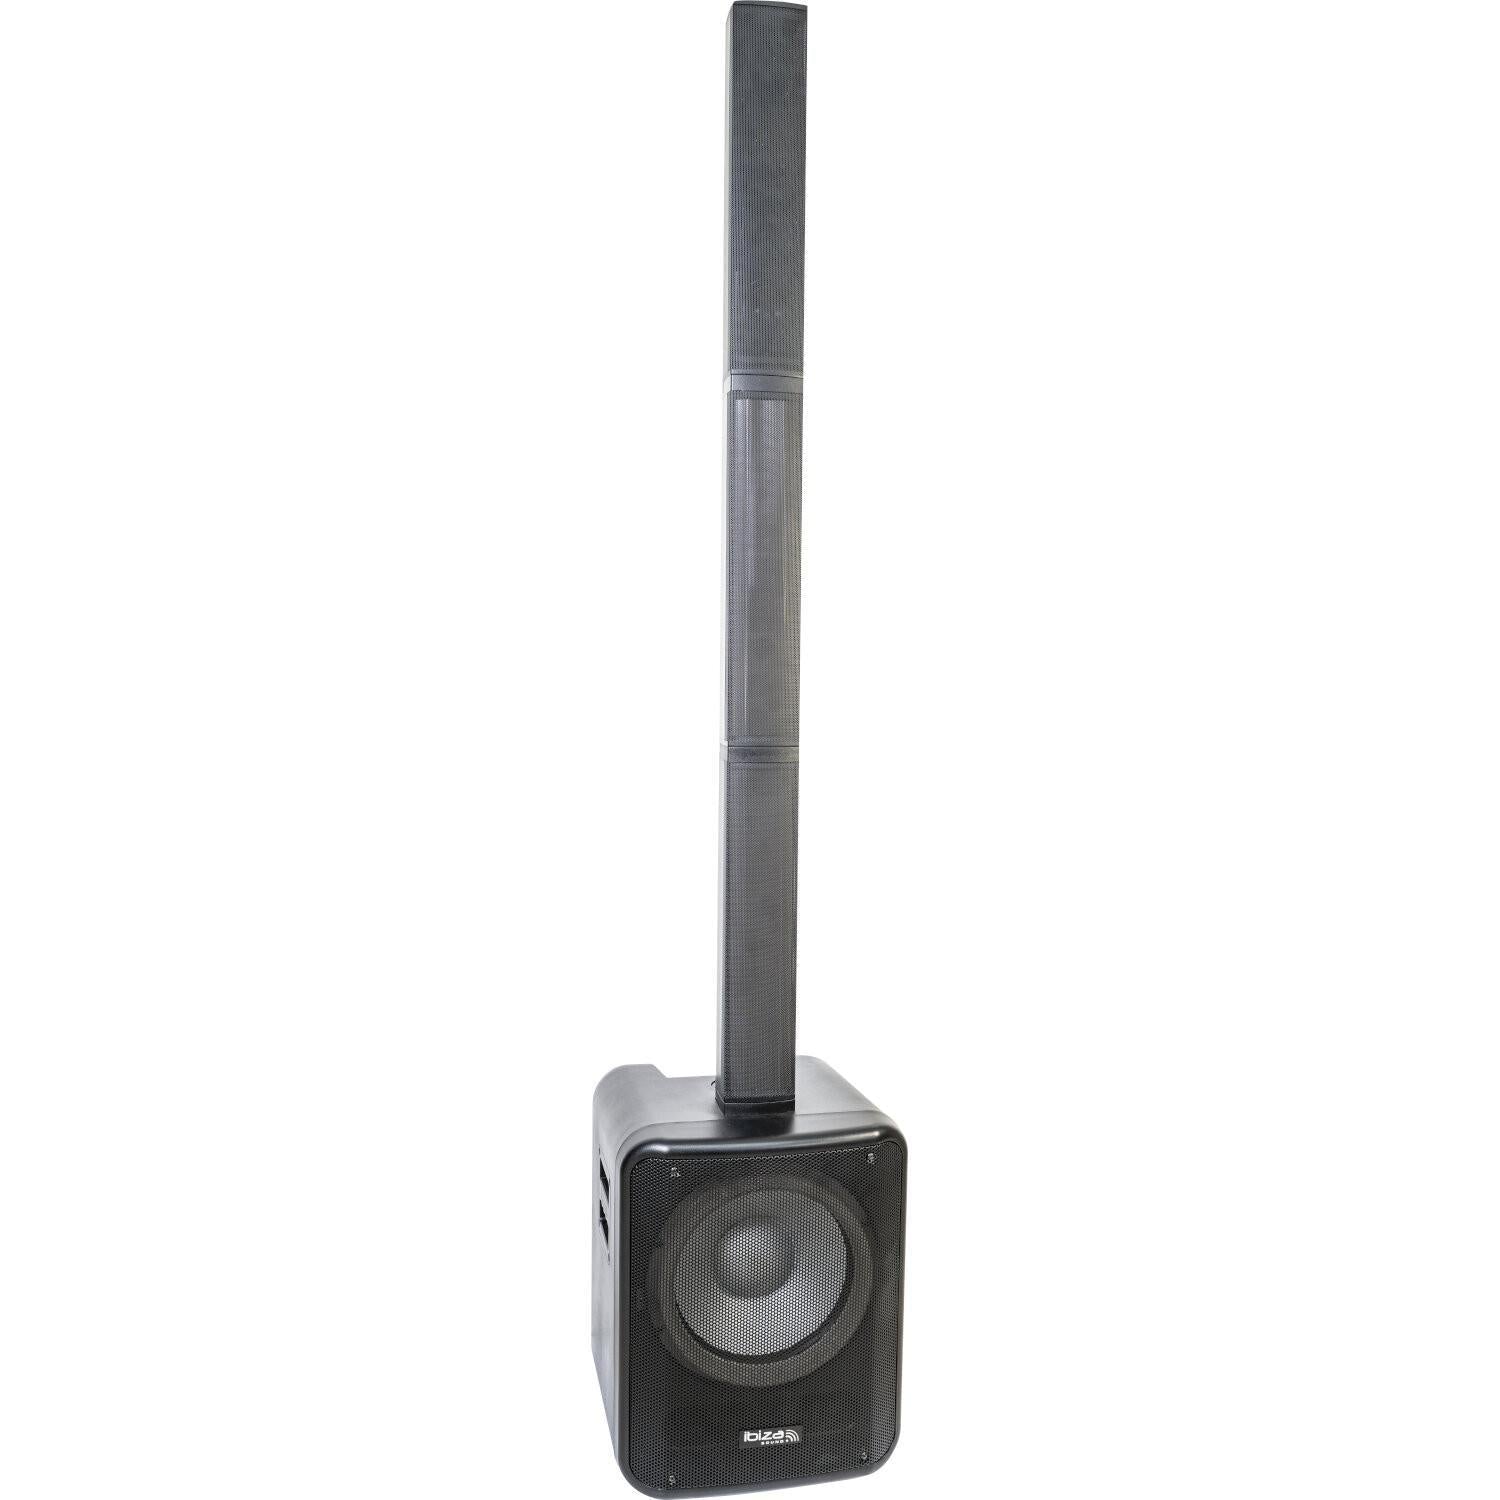 Ibiza Sound Monolite Compact 12" PA System 1000w - DY Pro Audio